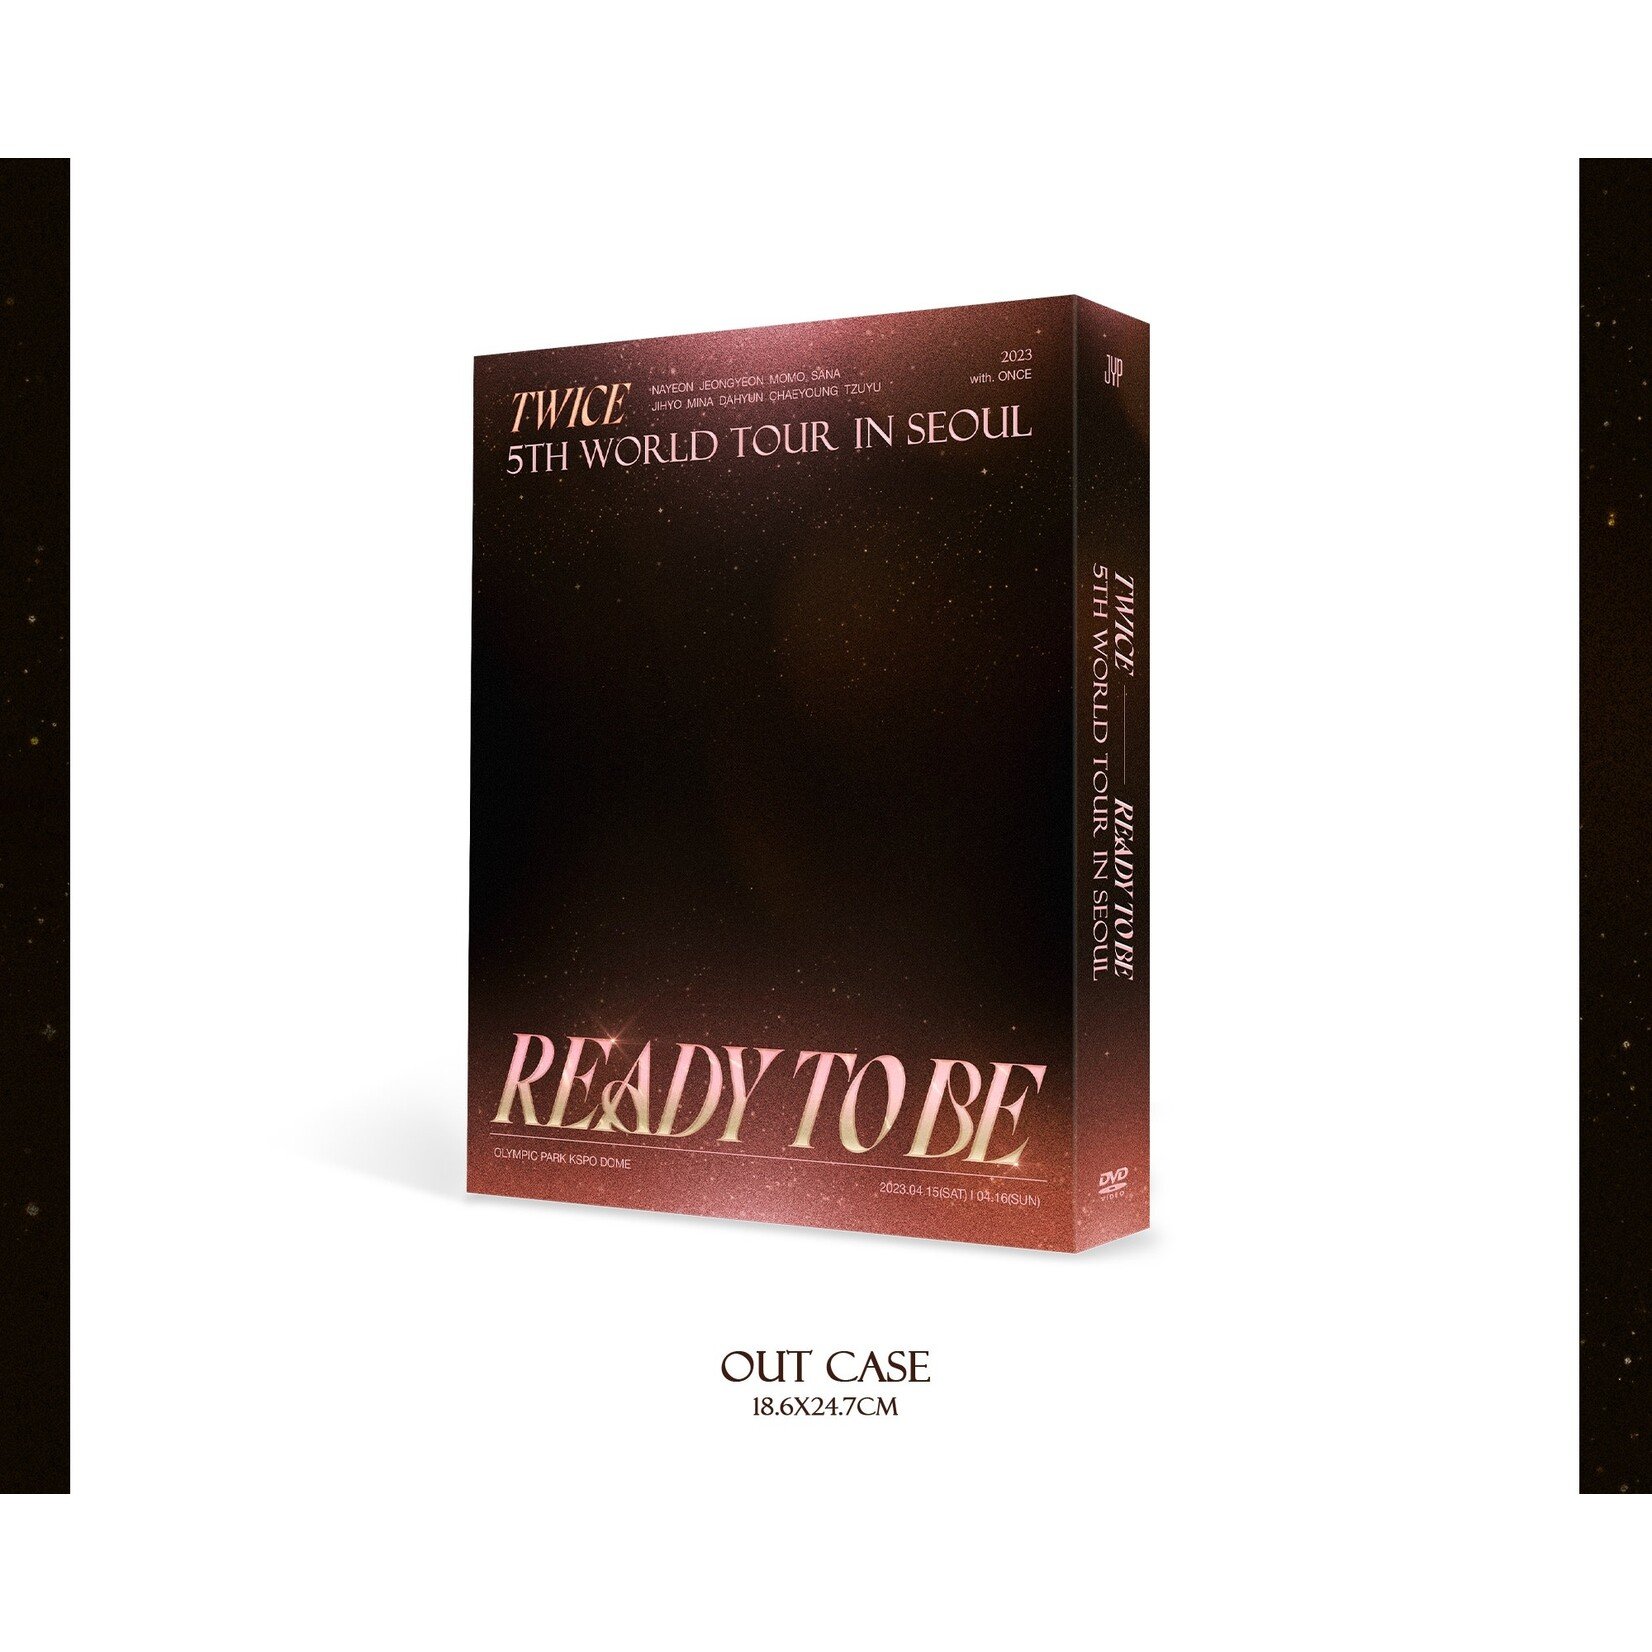 Twice TWICE - 5TH WORLD TOUR [READY TO BE] IN SEOUL BLU-RAY + Random Polaroid Photocard (JYP SHOP)